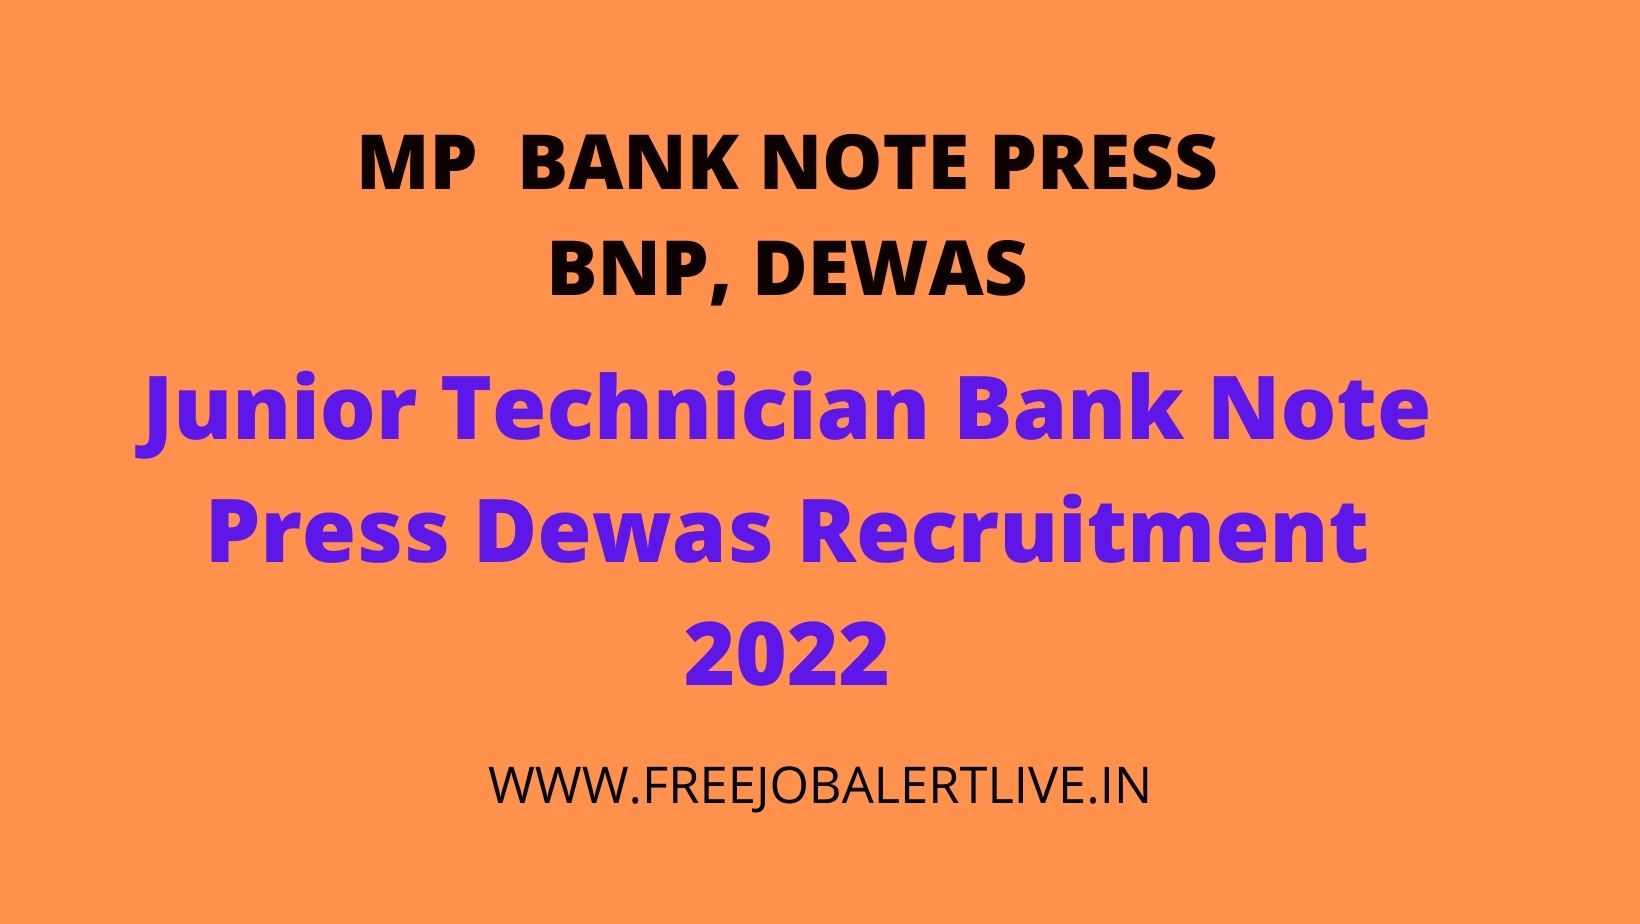 Junior Technician Bank Note Press Dewas Recruitment 2022